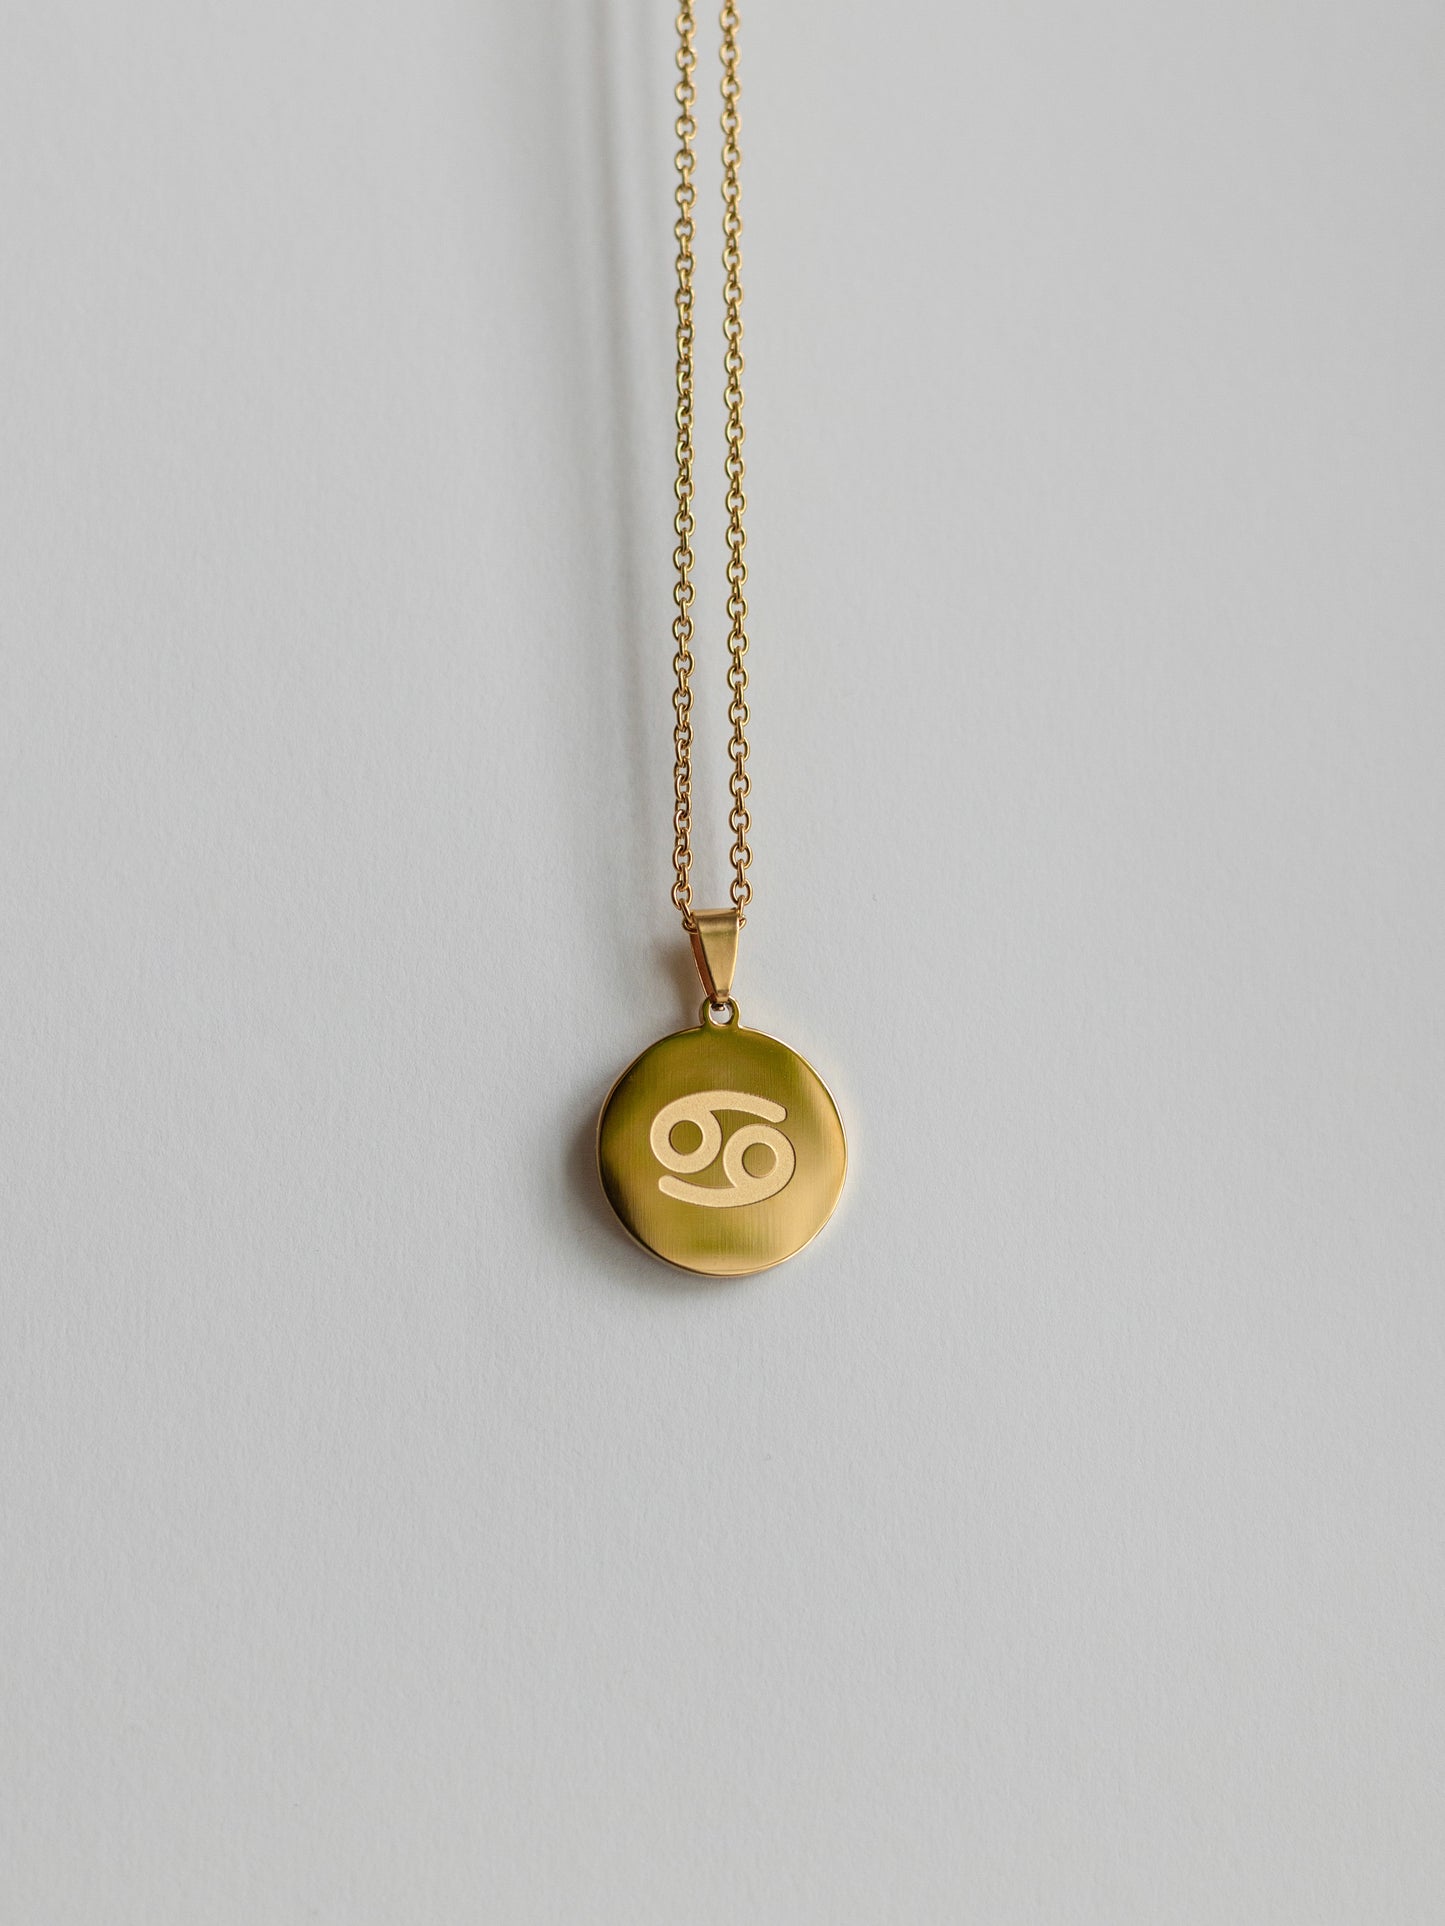 Zodiac signs necklace